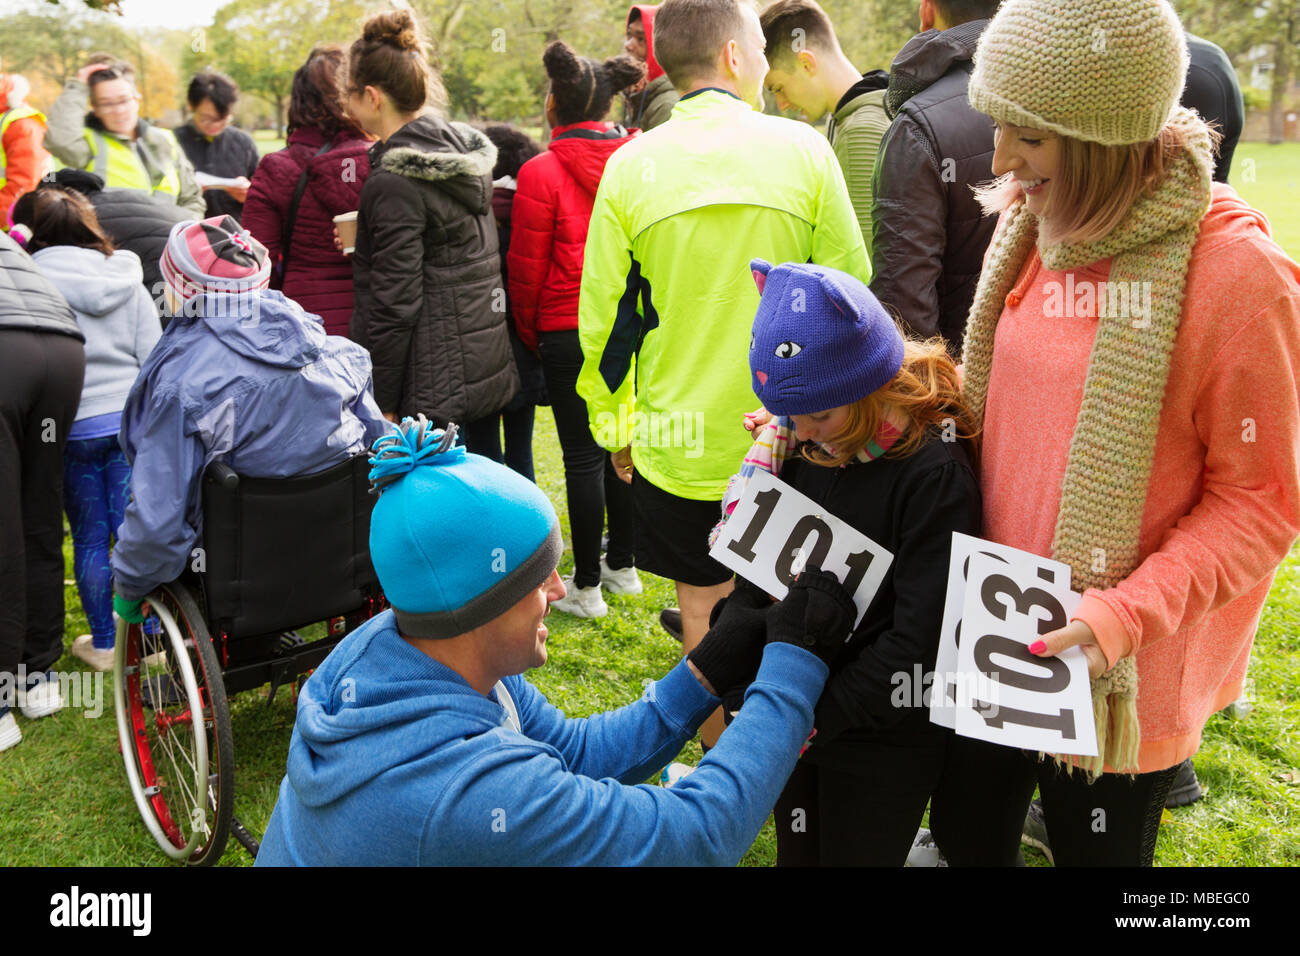 Padre corredor de maratón pinning de bib en la hija de la caridad se ejecutan en park Foto de stock